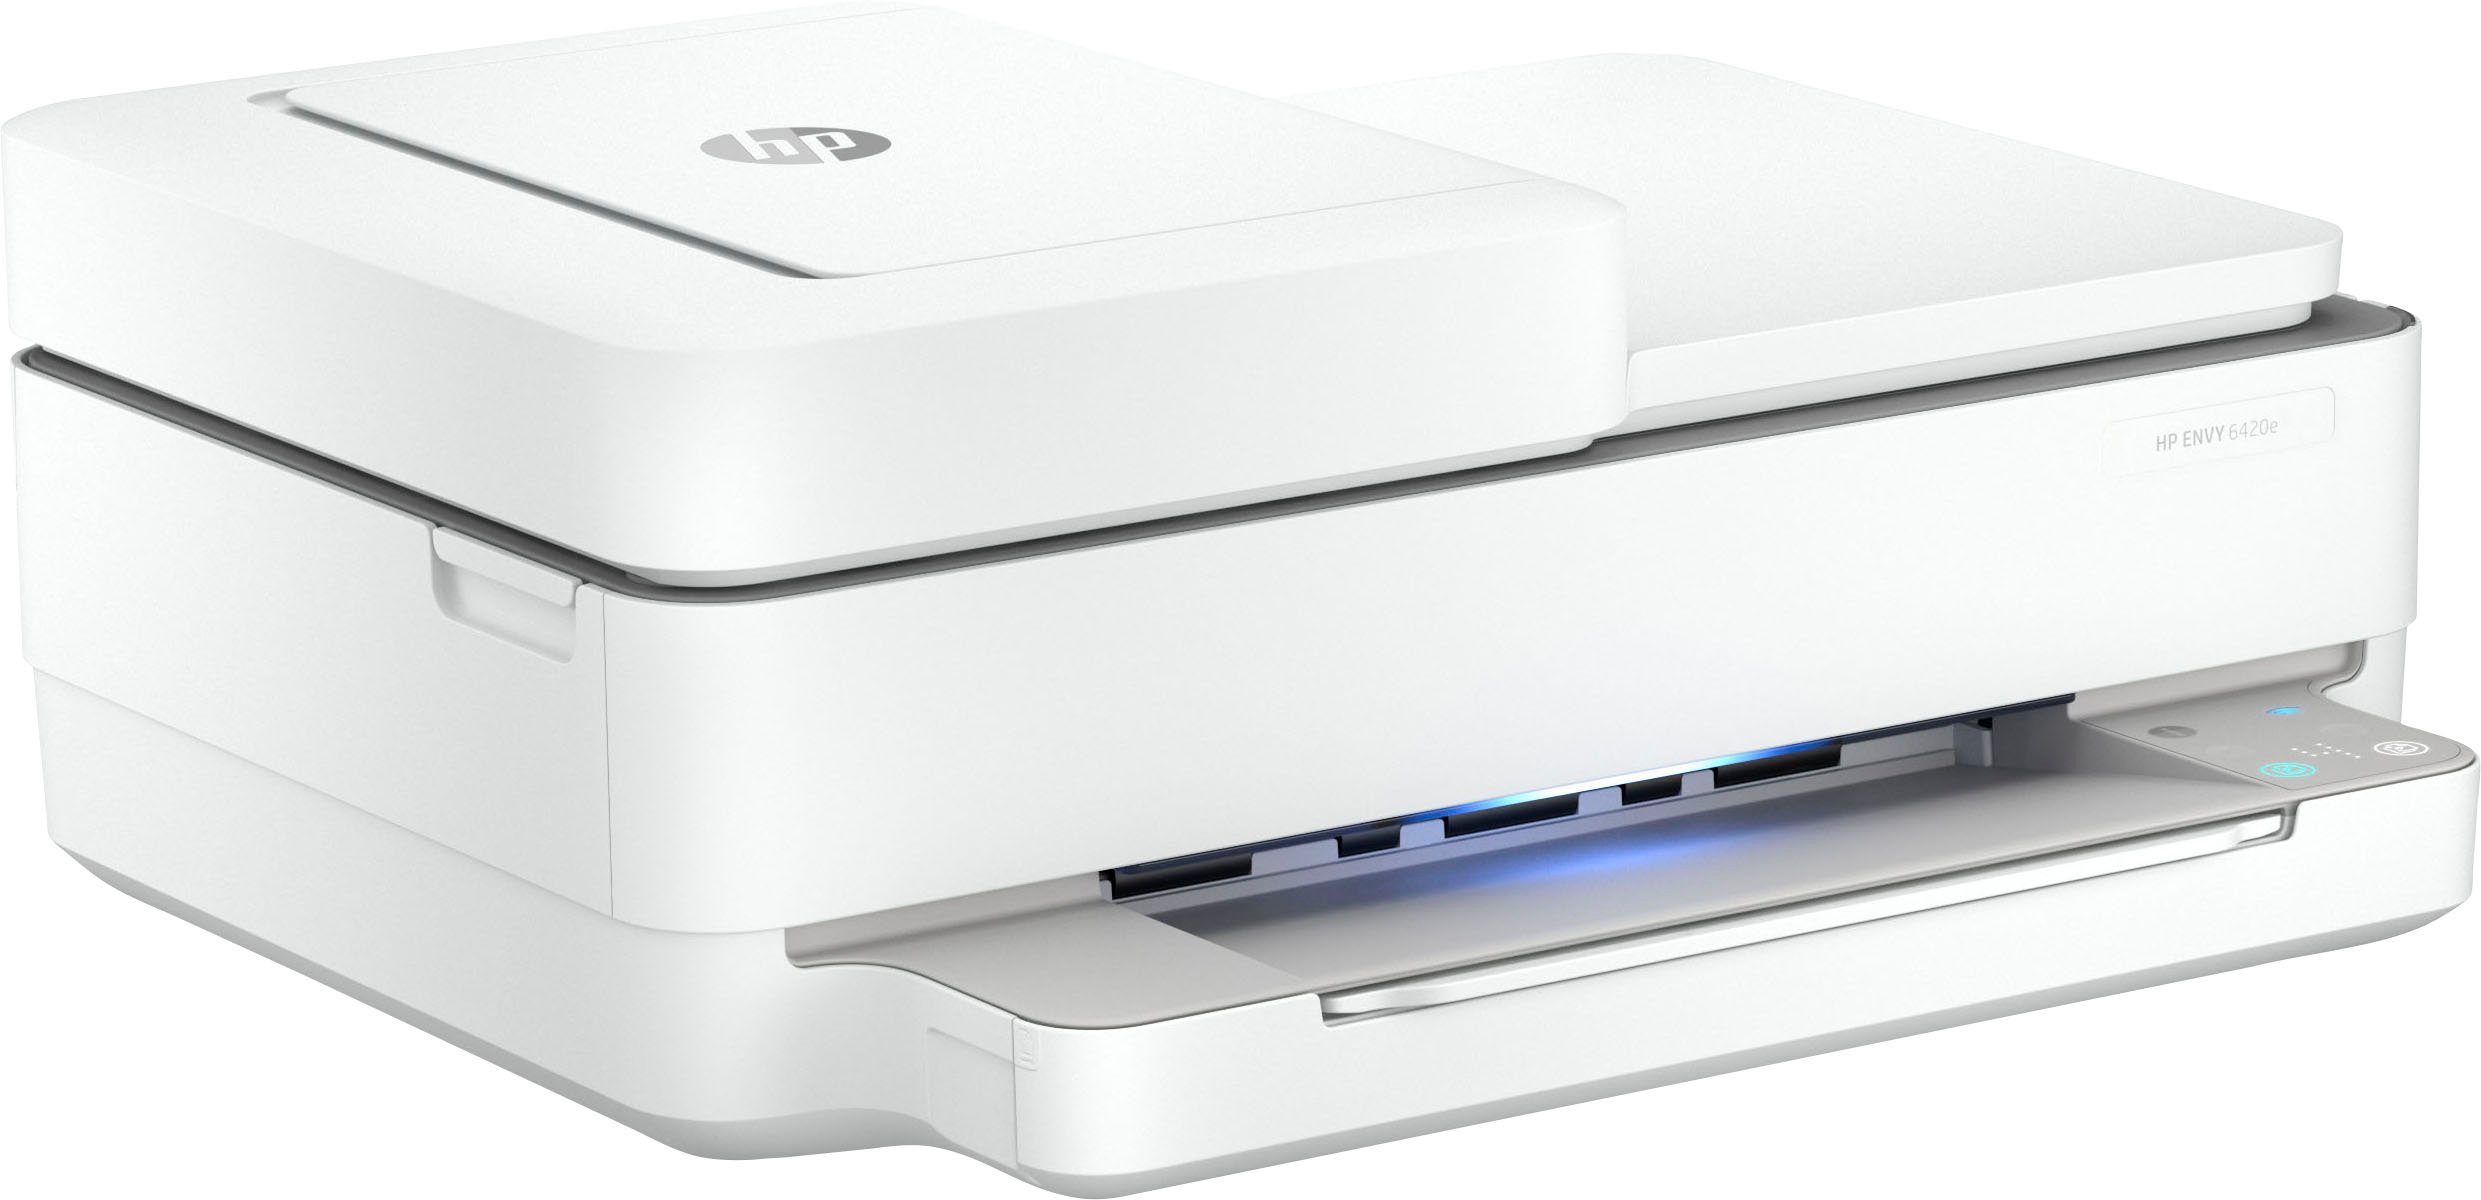 ENVY Ink color (Wi-Fi), Multifunktionsdrucker, (WLAN 6420e AiO kompatibel) A4 HP Instant 7ppm Printer HP+